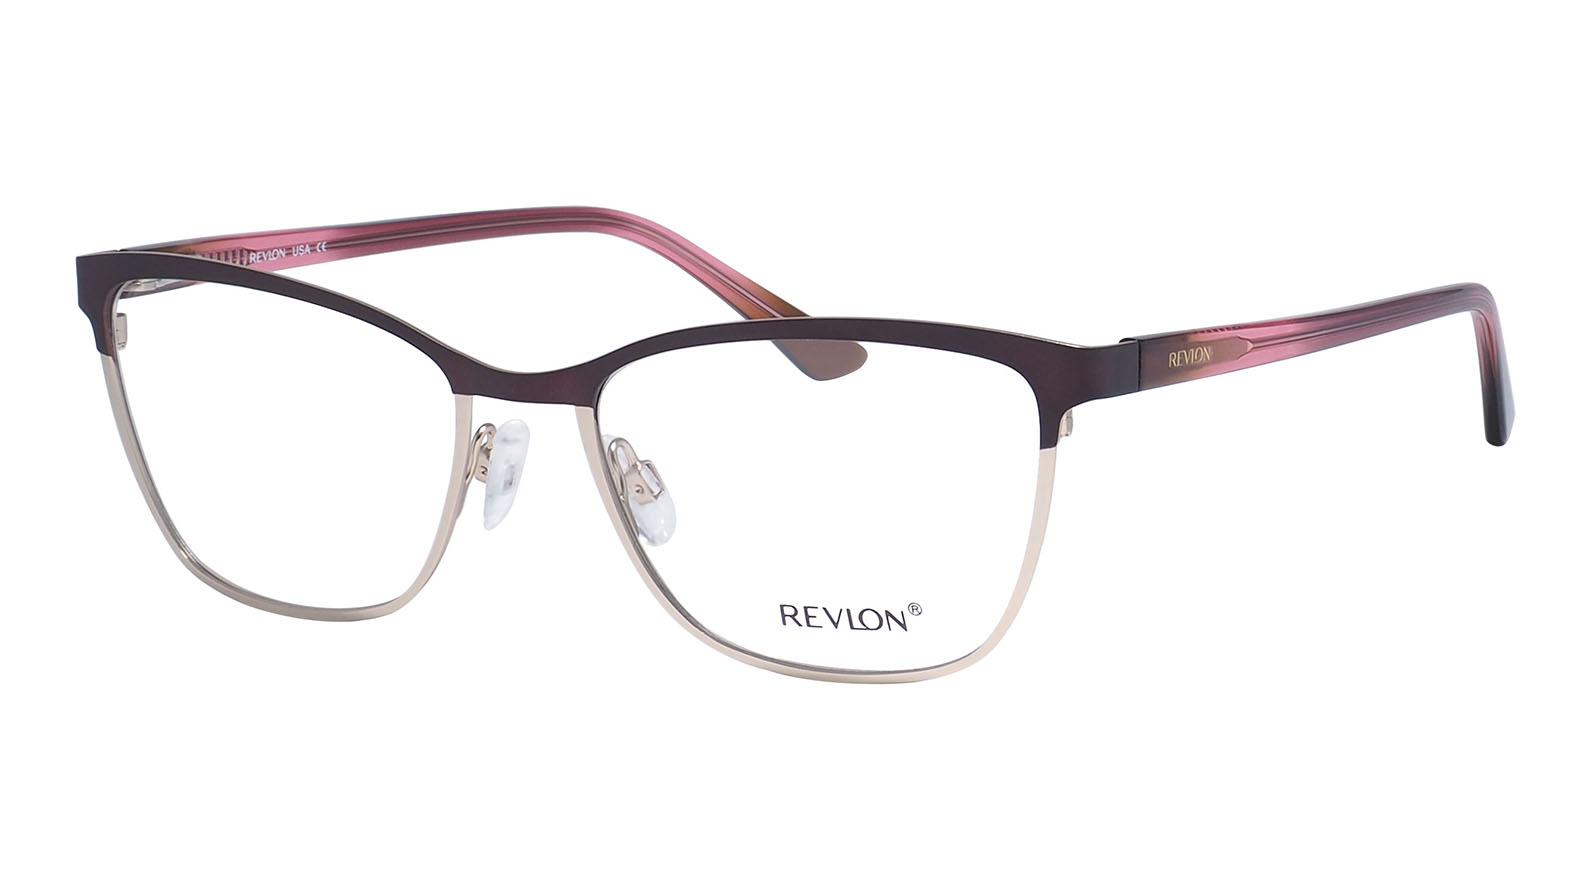 Revlon 1830 04